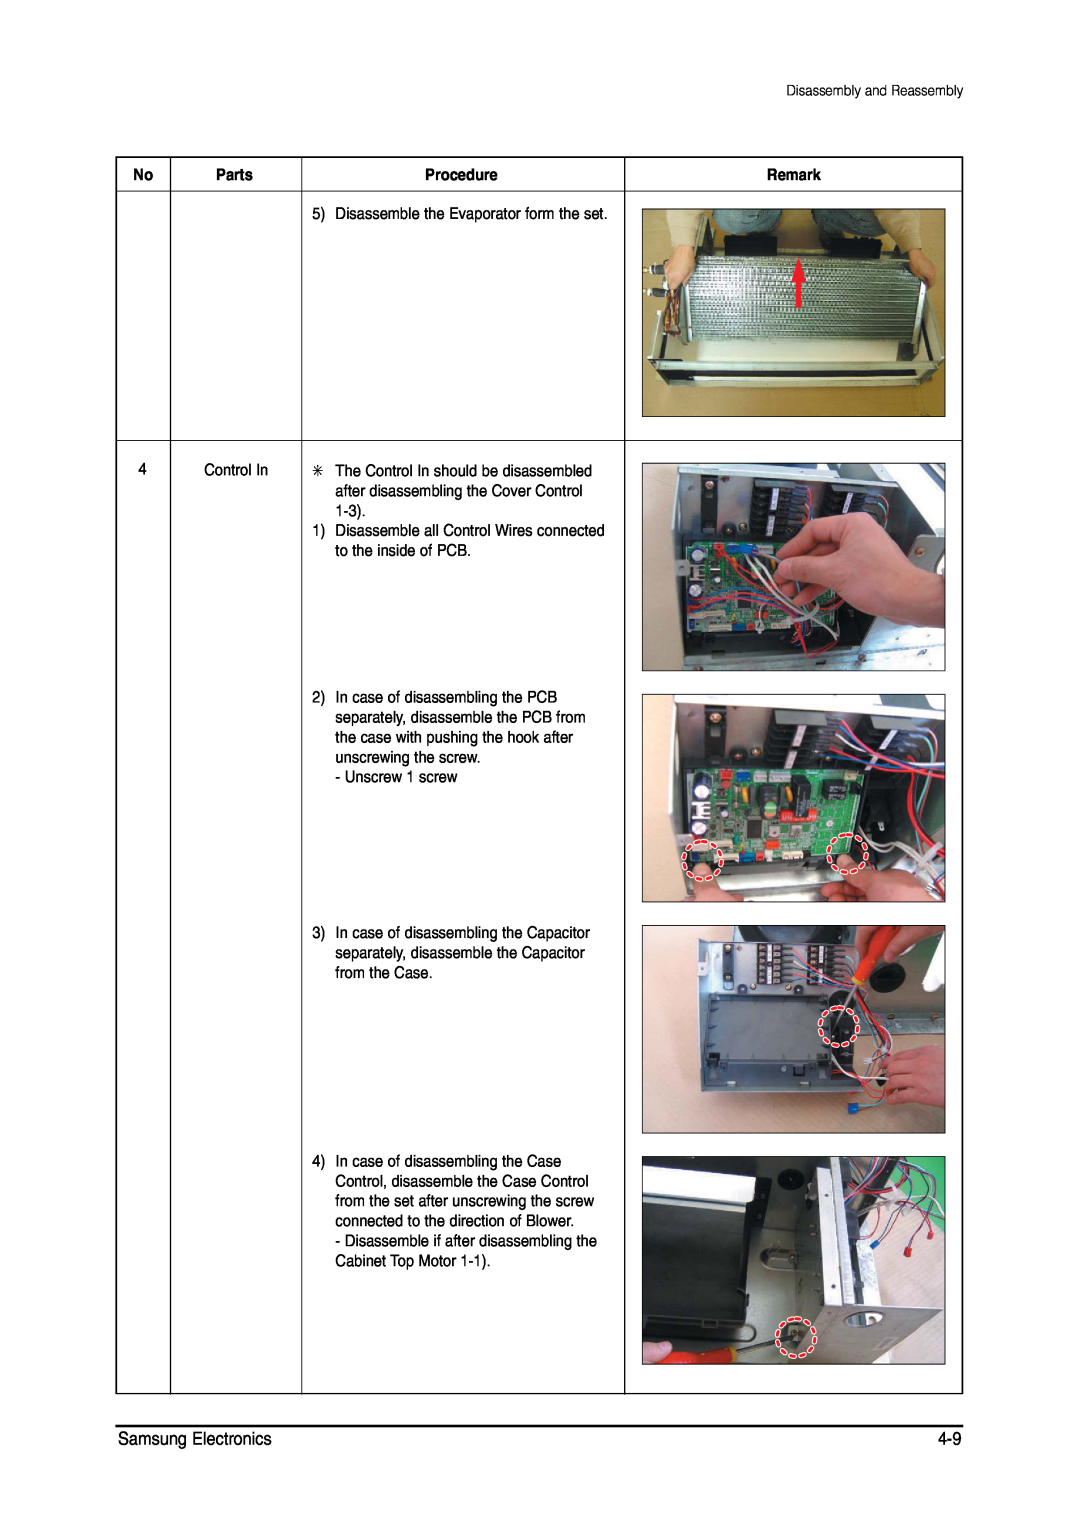 Samsung MH026FNCA service manual Samsung Electronics, Parts, Procedure 